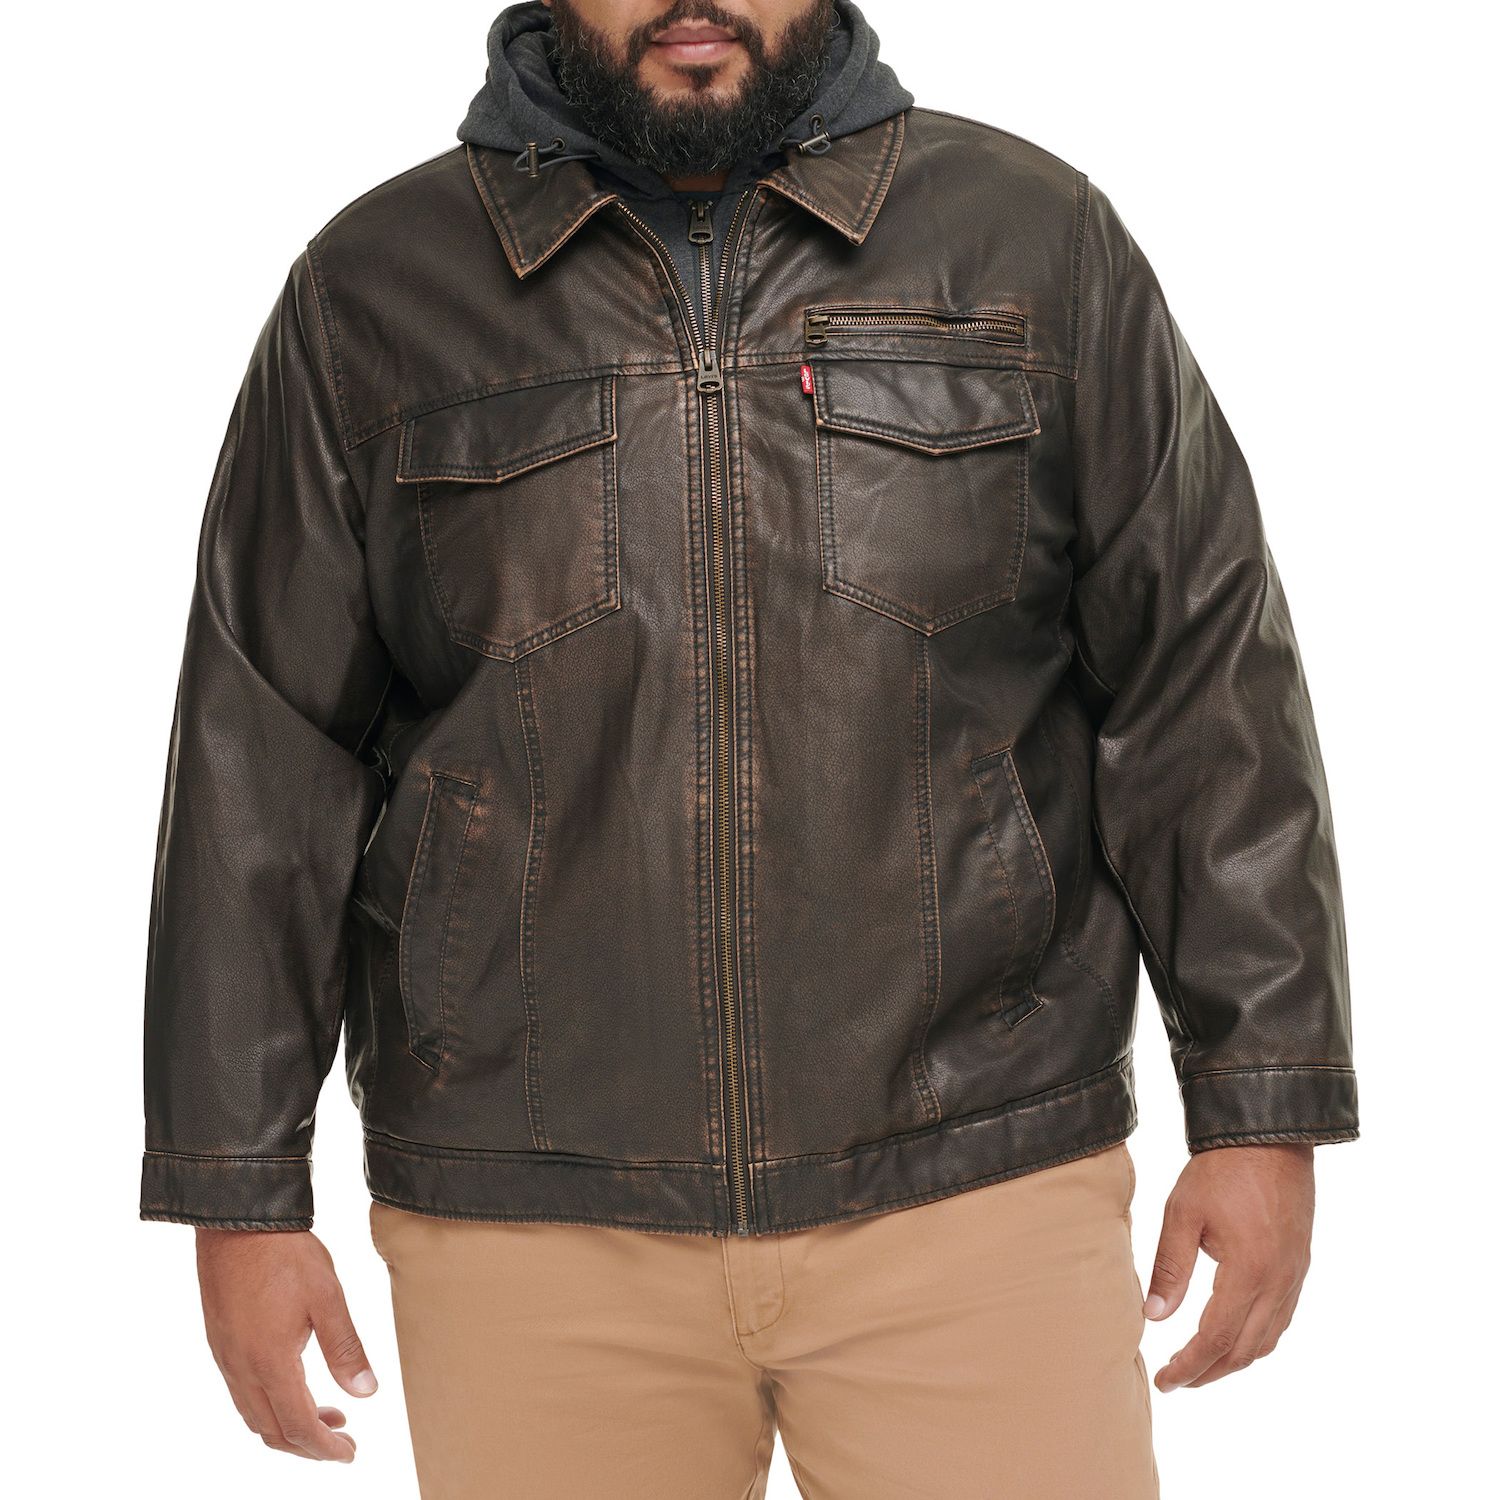 levi leather jacket with hood